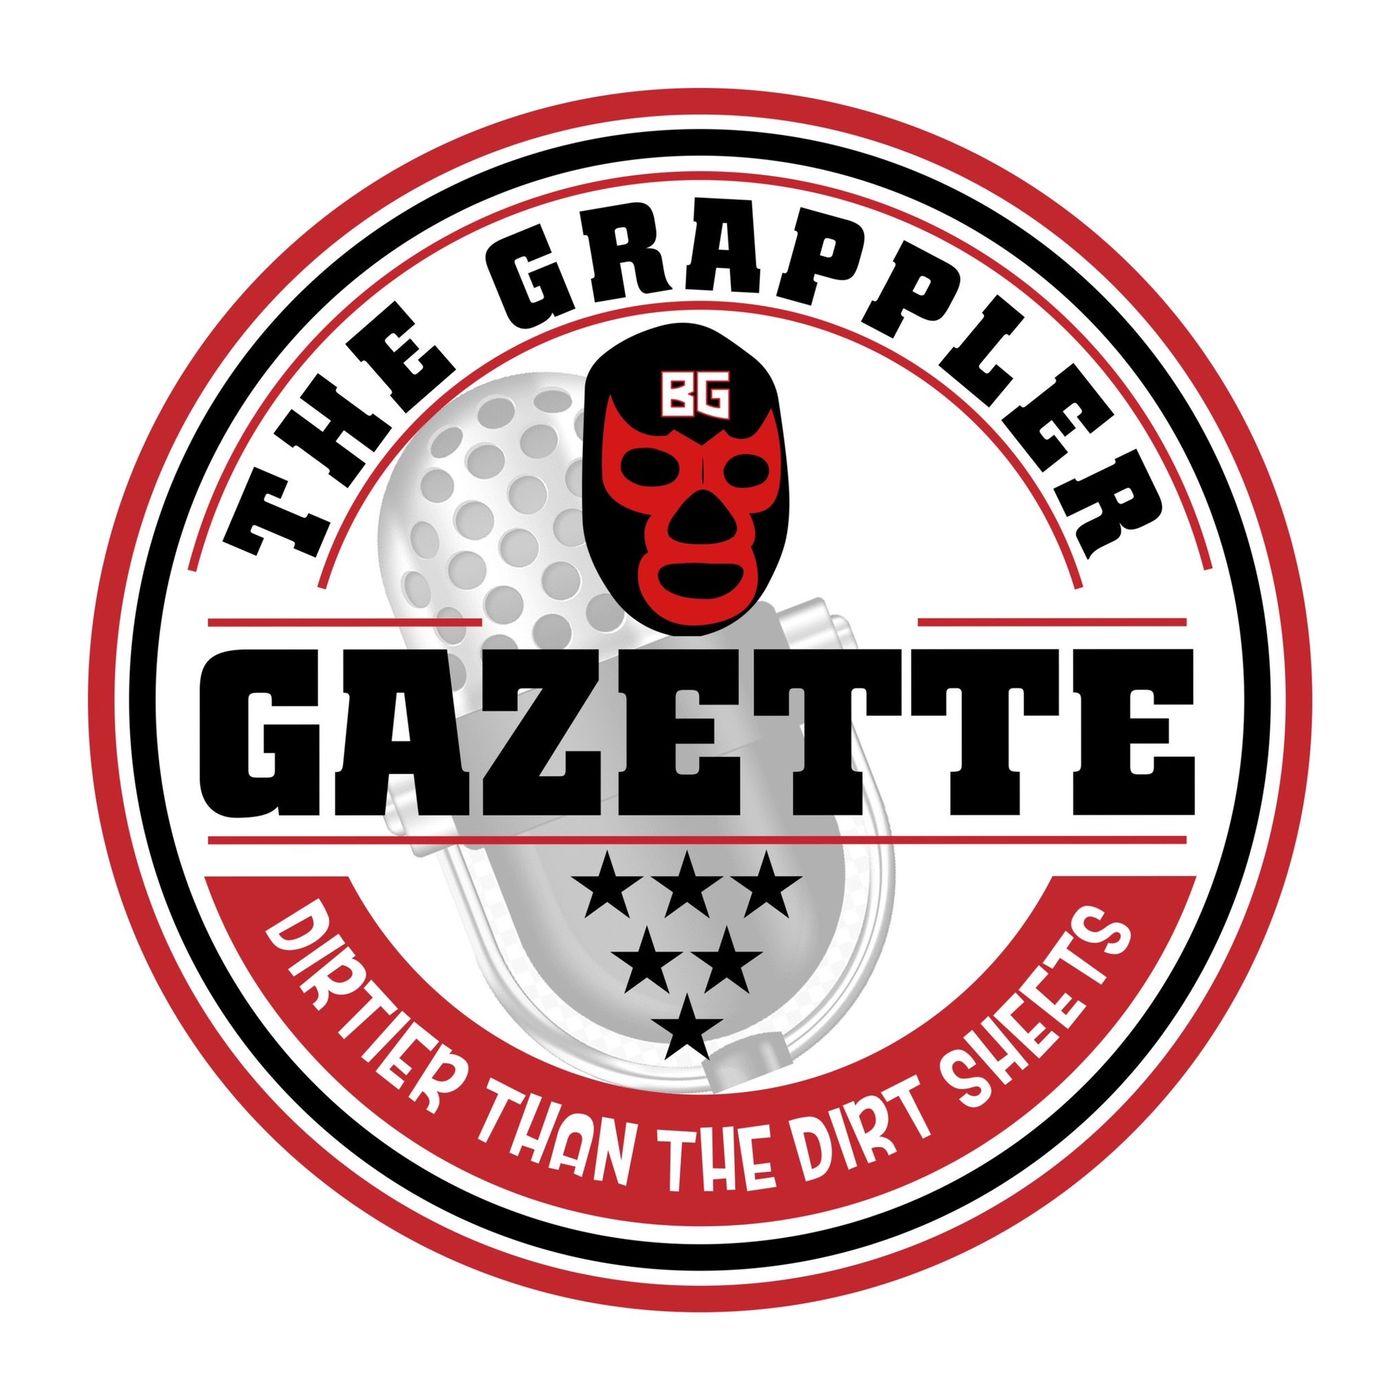 The Grappler Gazette Podcast